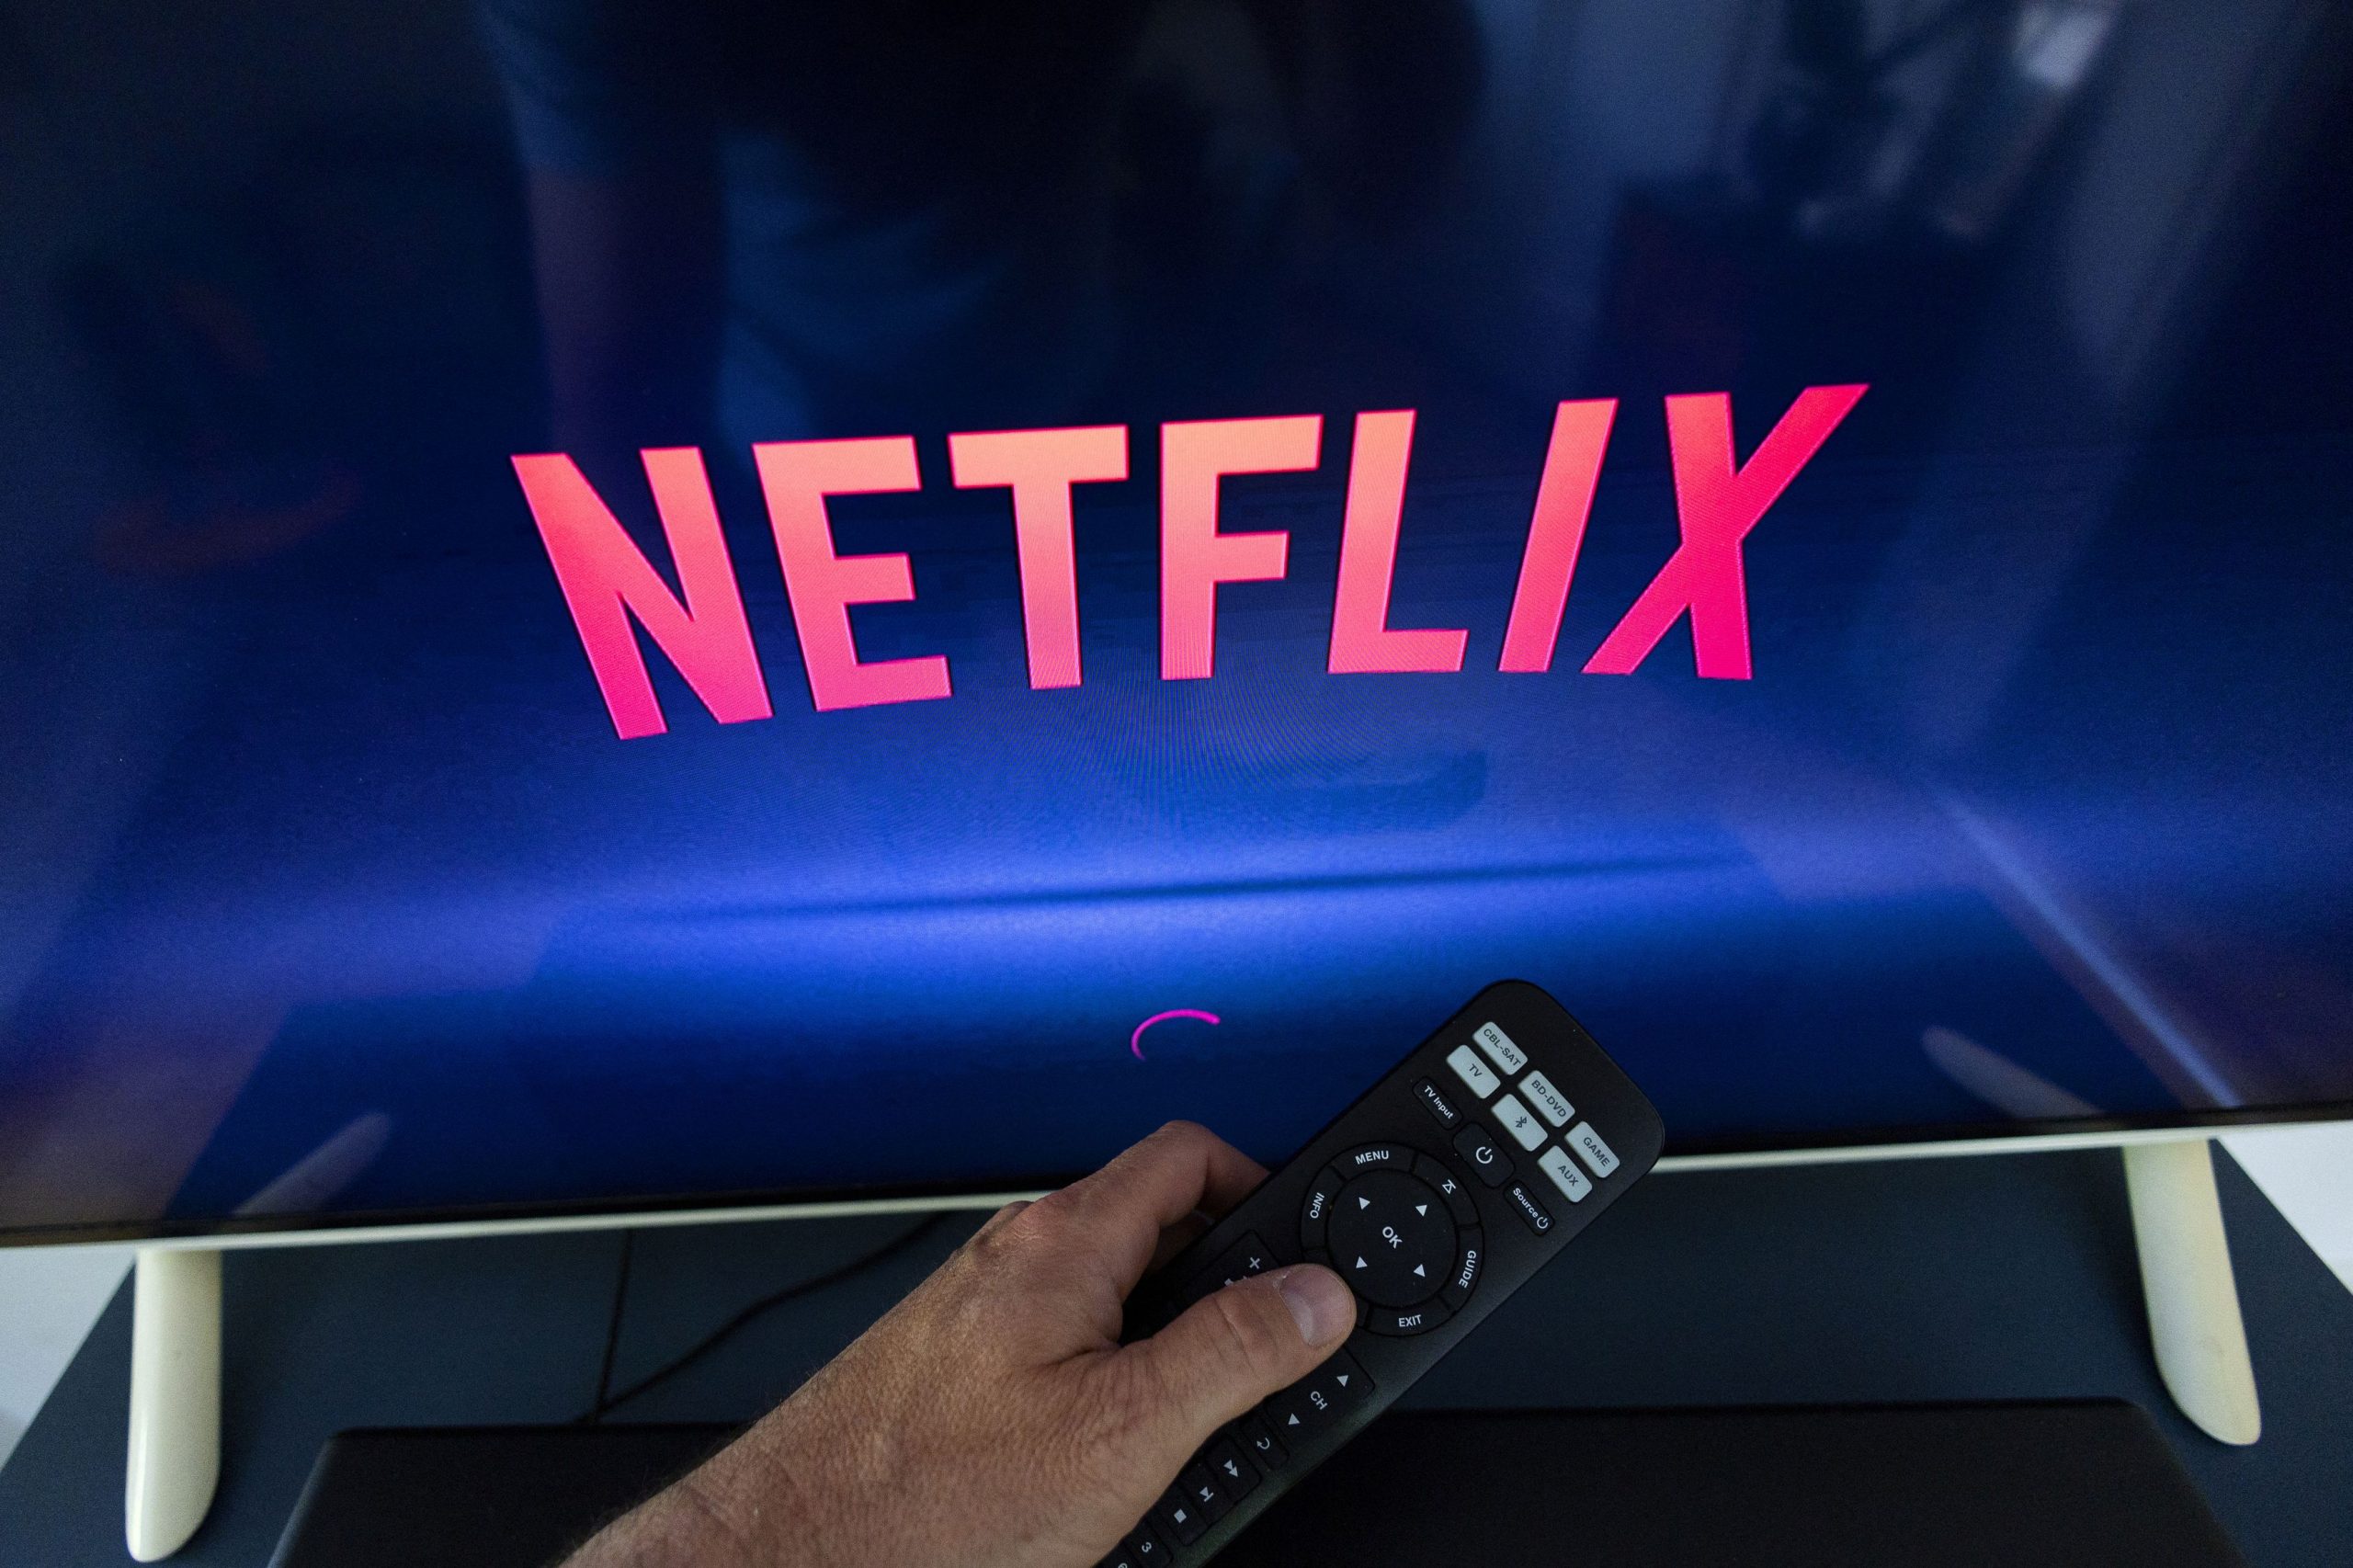 Netflix: Πότε έρχεται το μπλόκο στους κοινόχρηστους κωδικούς